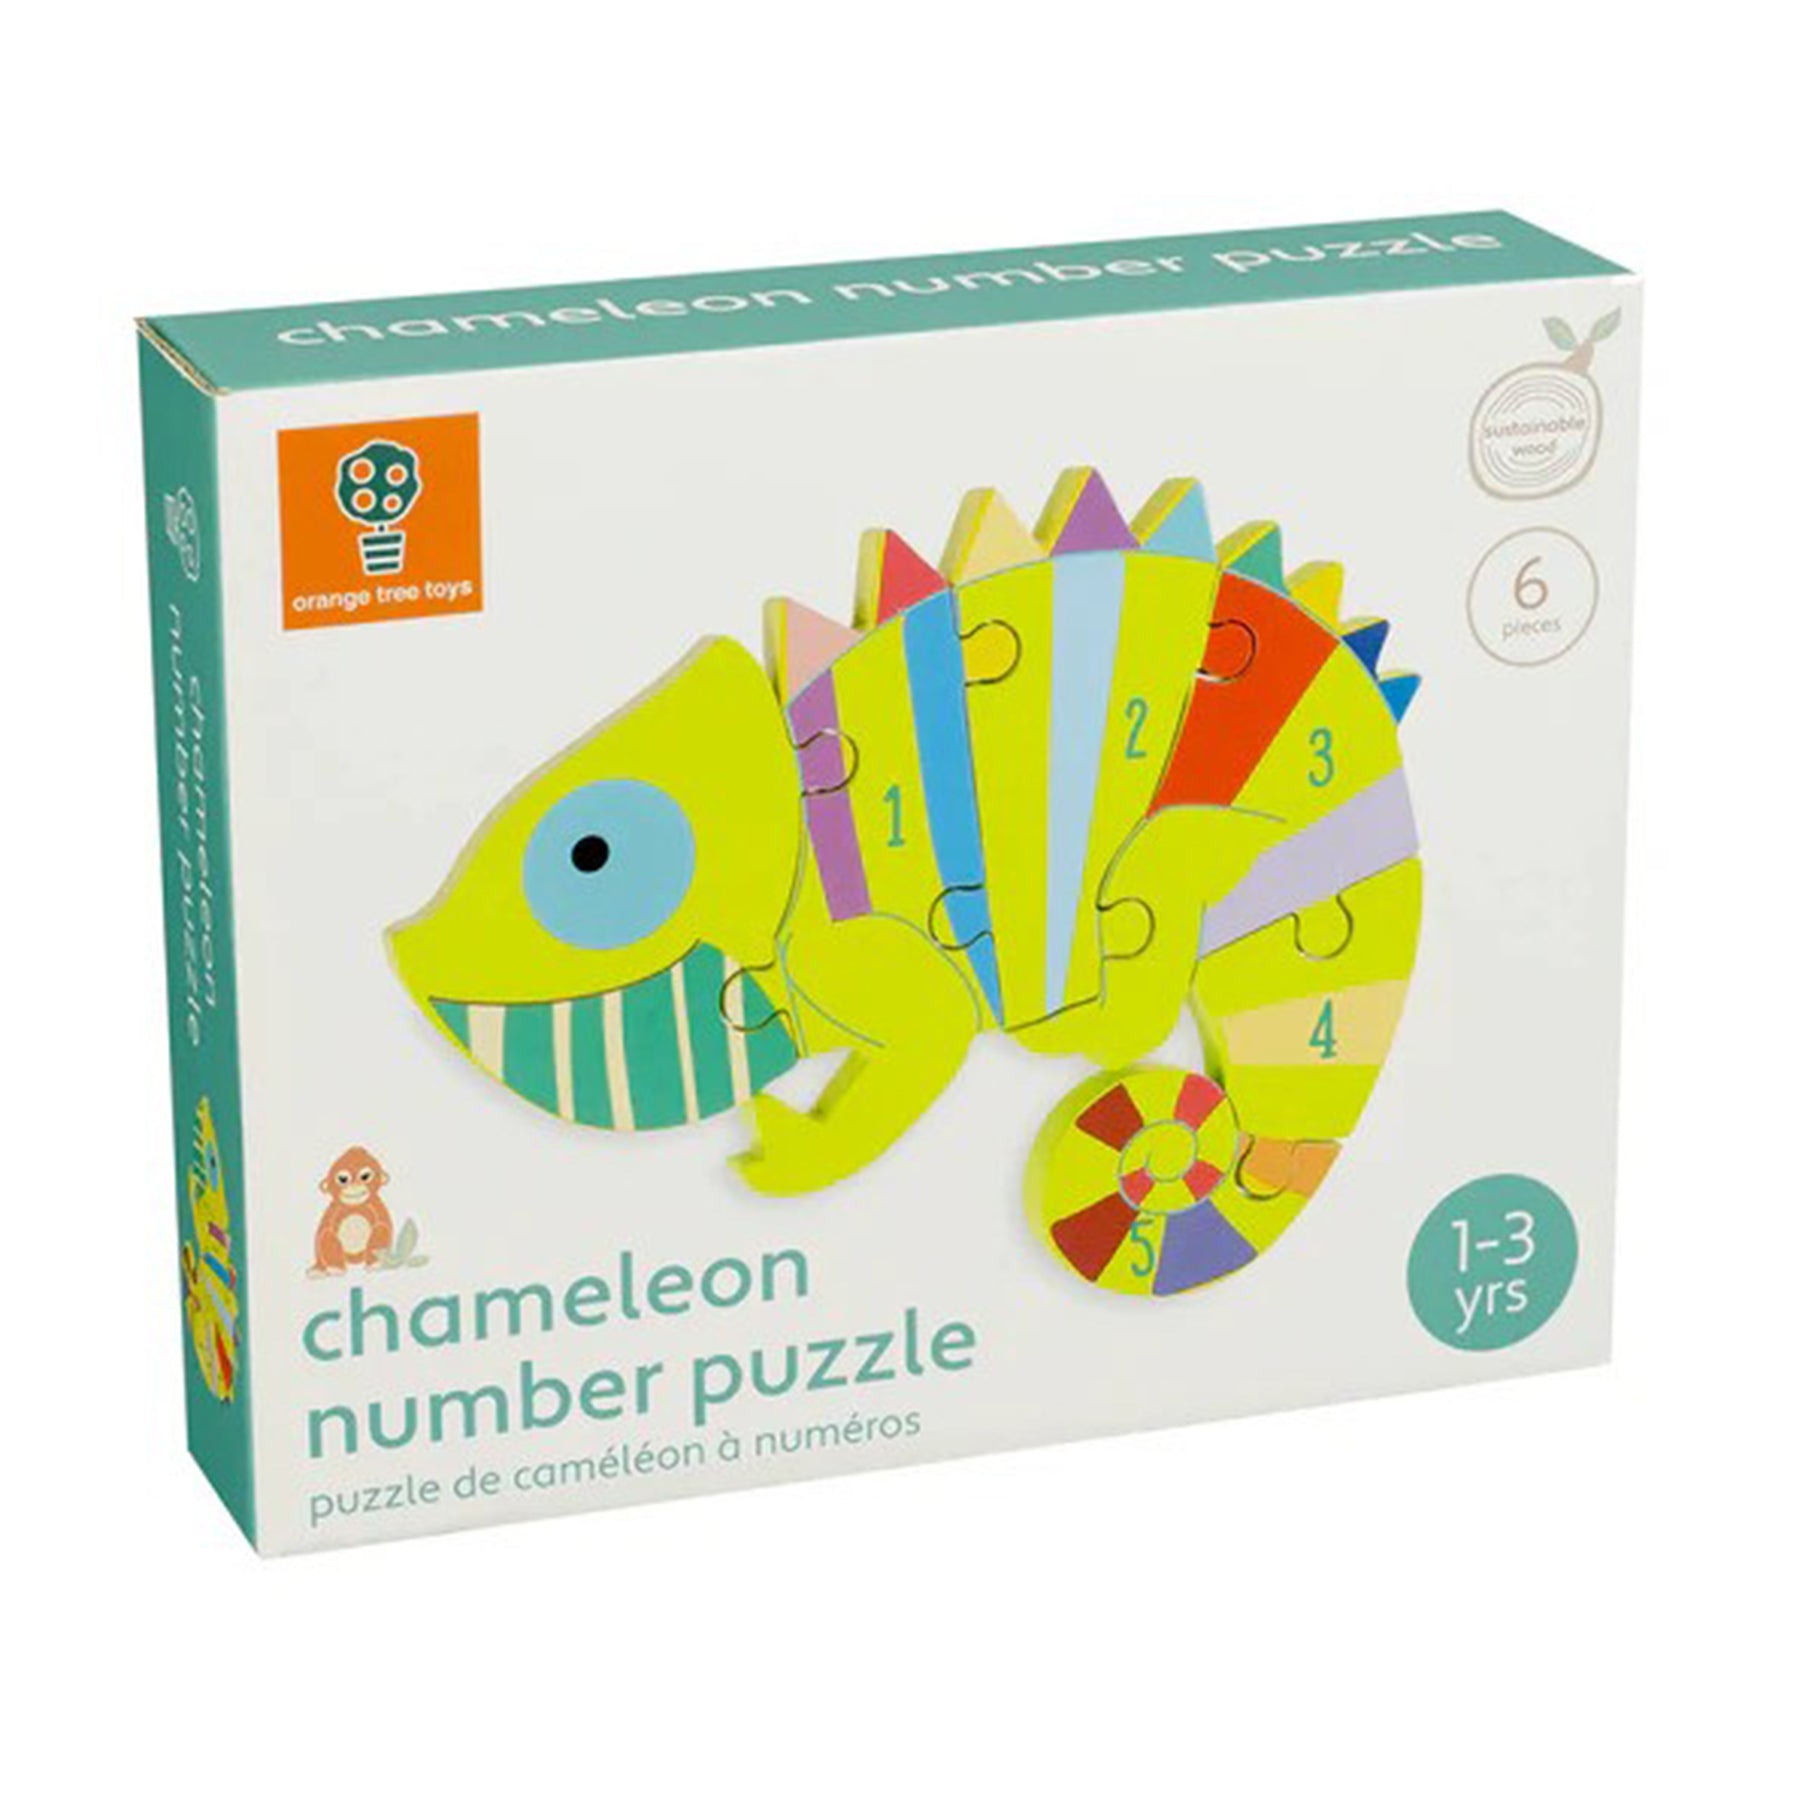 Chameleon number puzzle